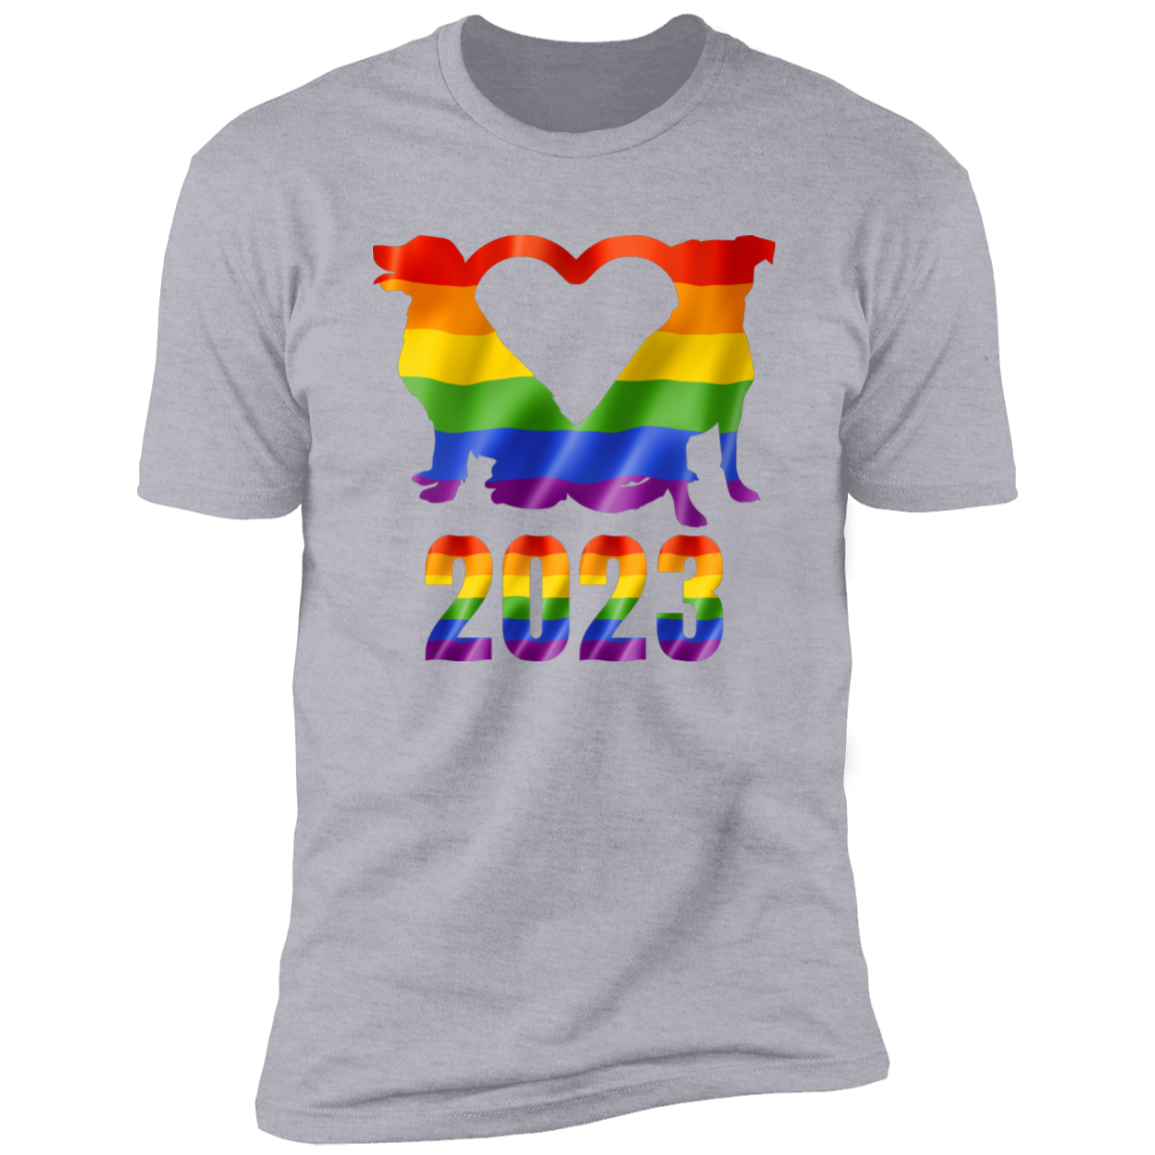 Dog Pride 2023, dog pride dog shirt for humans, in light heather gray